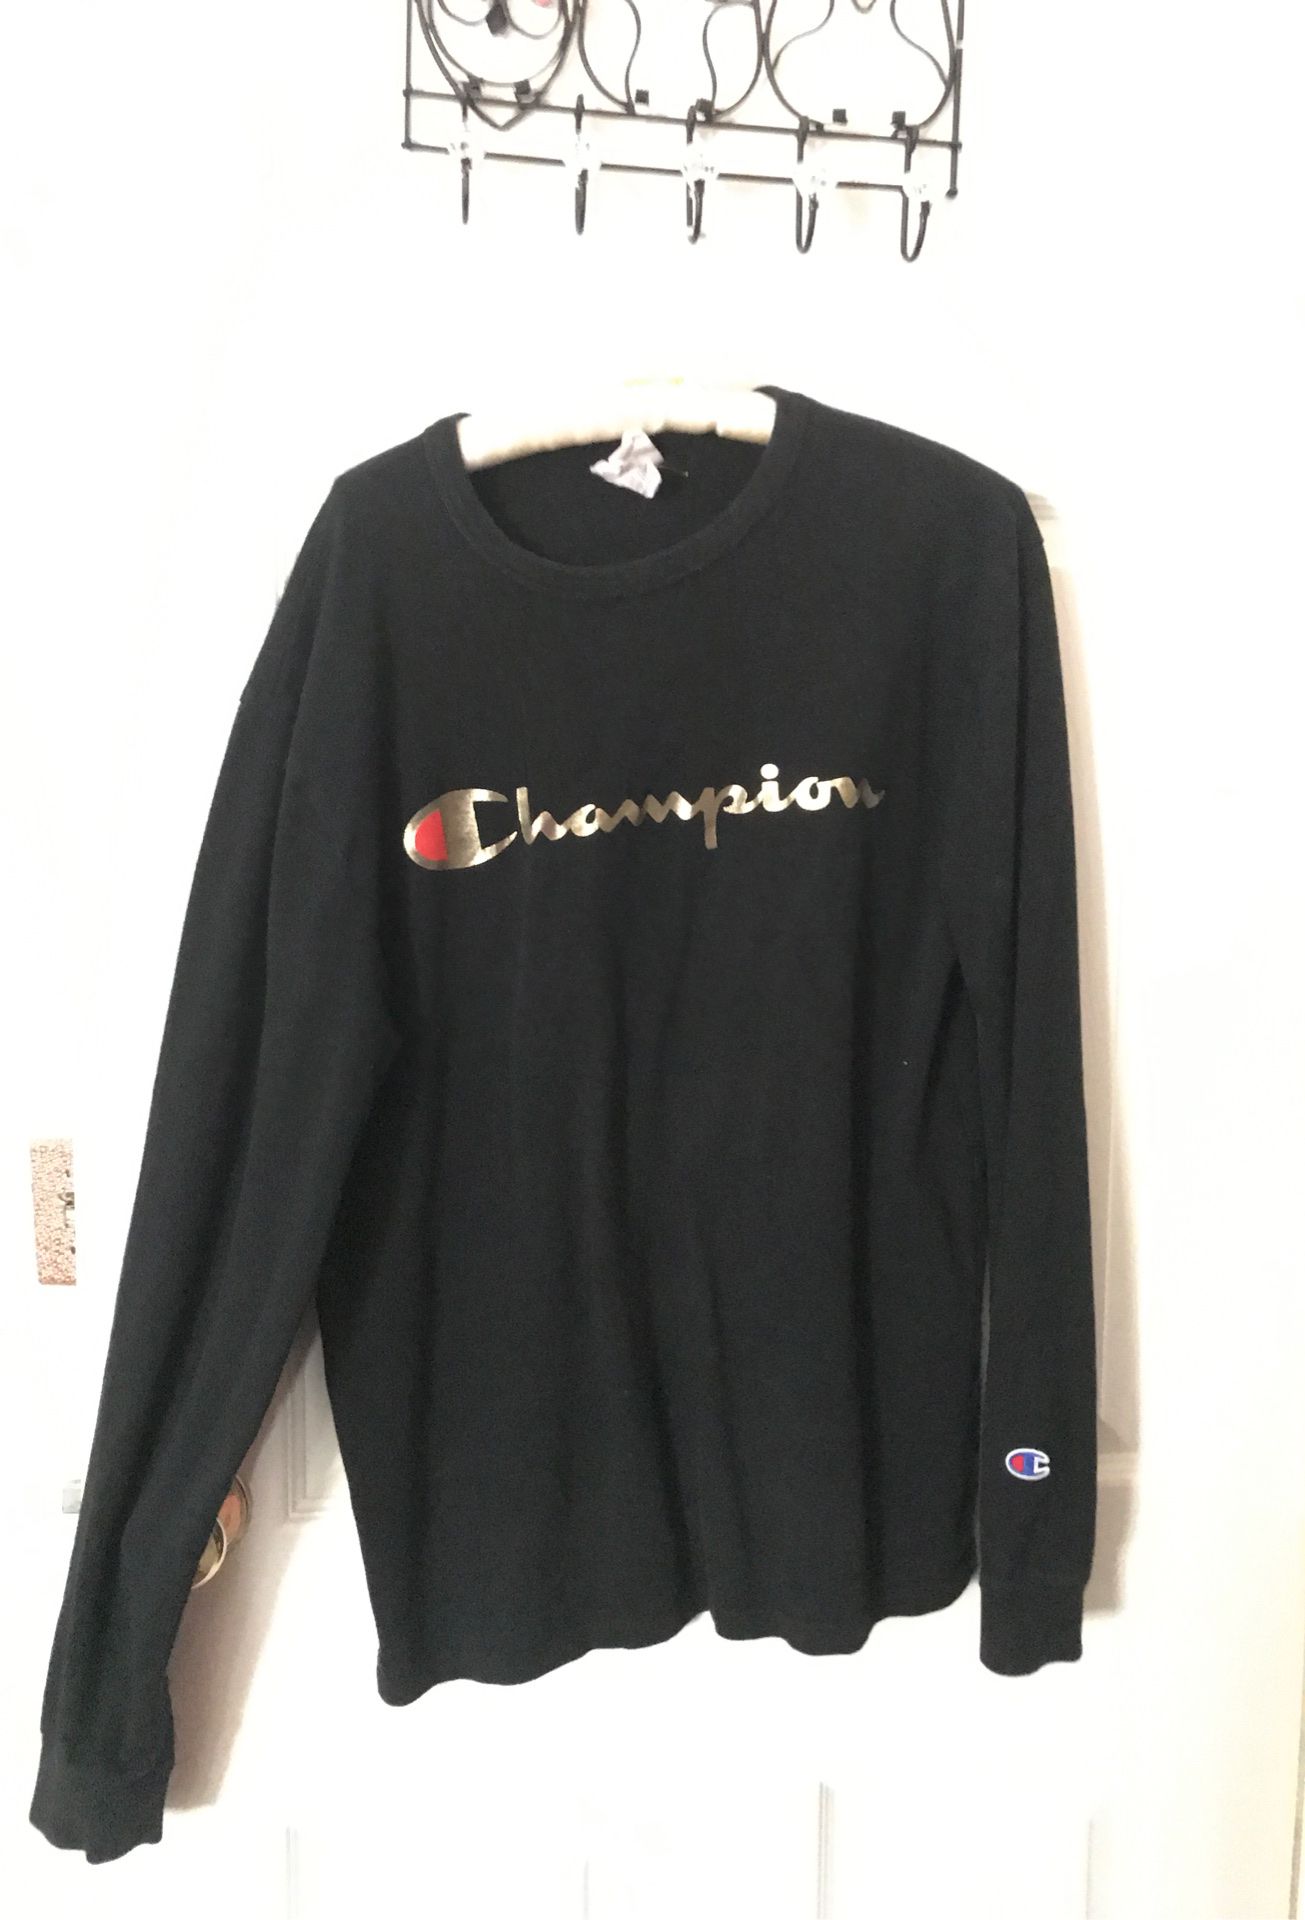 size medium black champion sweater with gold writing